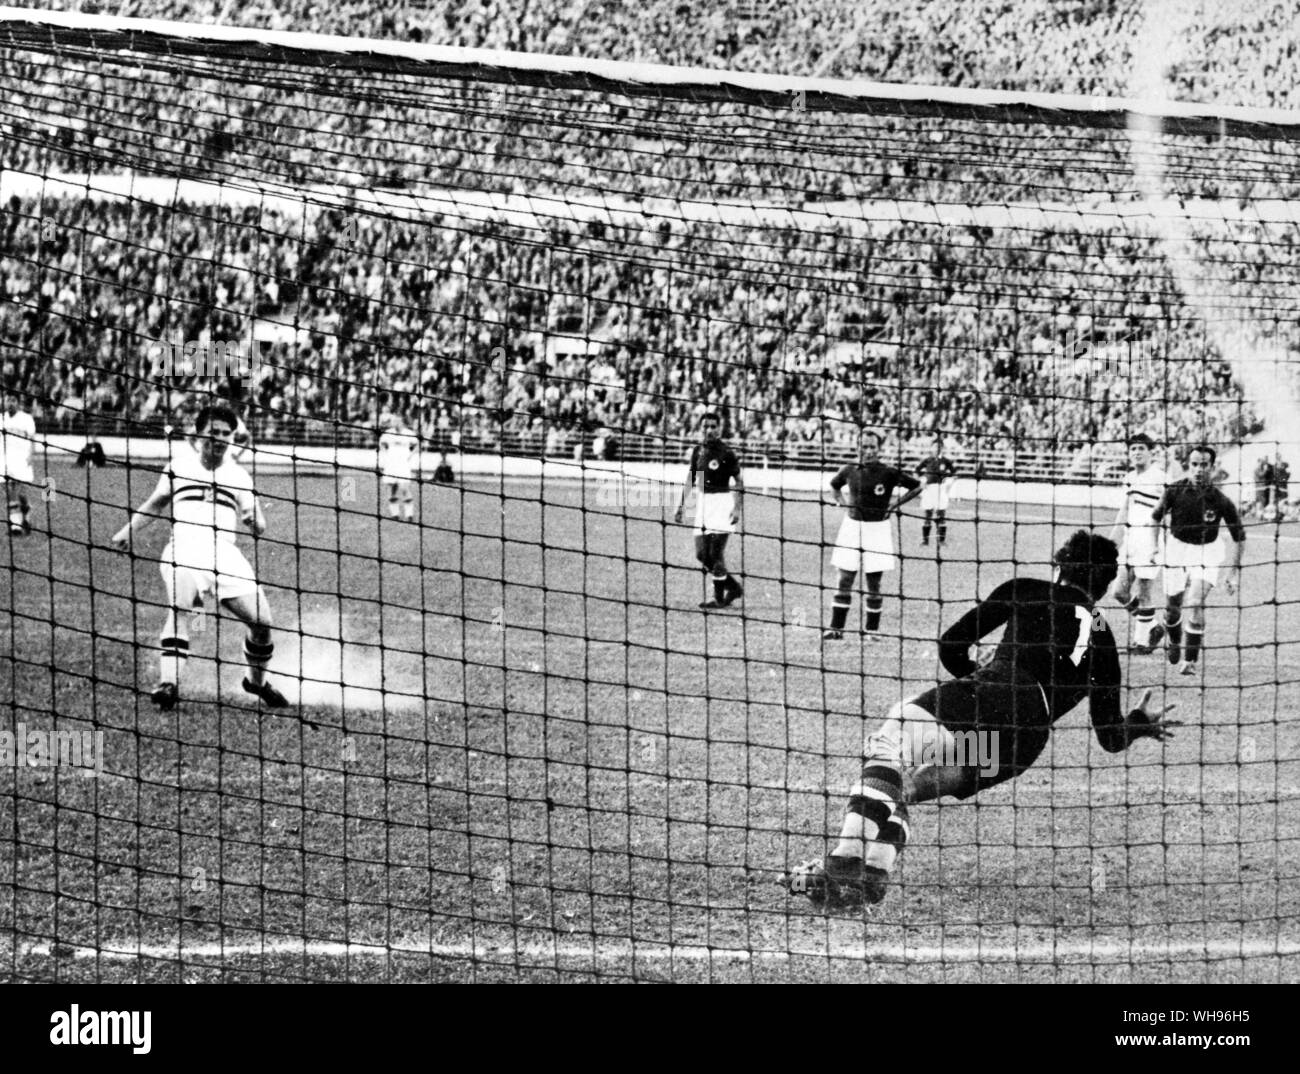 Finnland, Helsinki/Olympics, 1952: Aktion aus dem Olympischen Fußball-Finale. Ungarn 2, Jugoslawien 0. Stockfoto